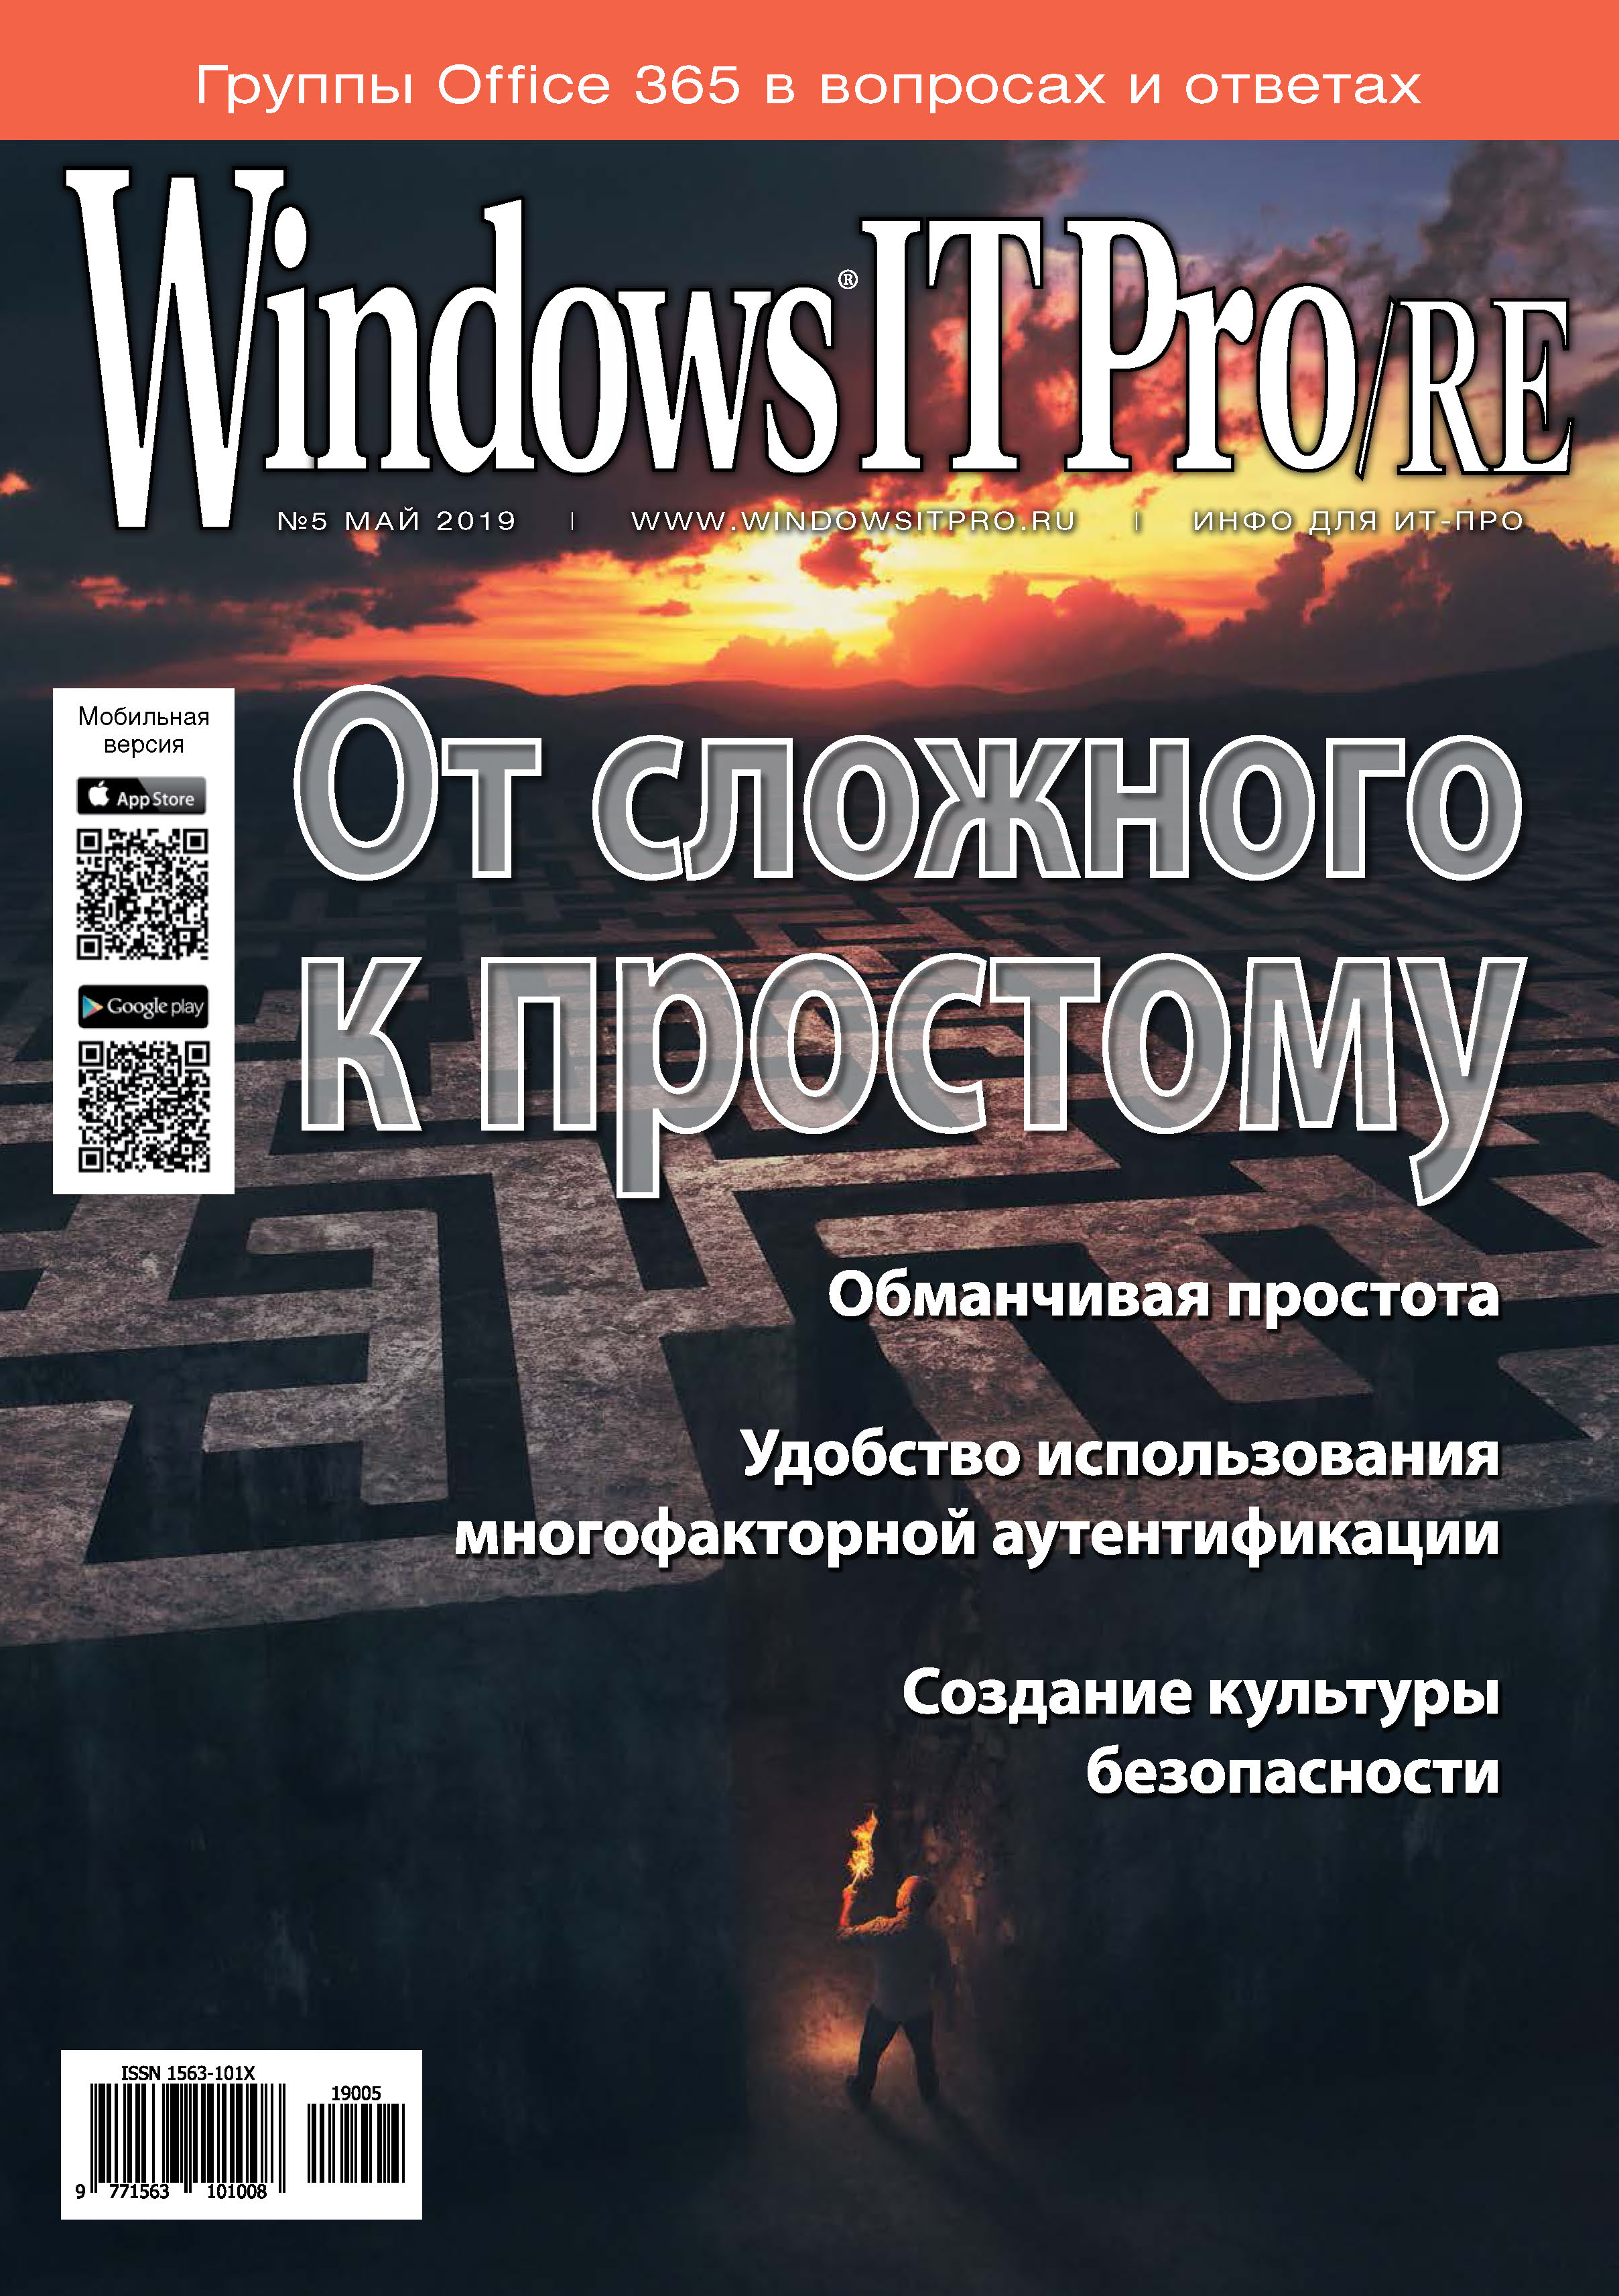 Открытые системы Windows IT Pro/RE №05/2019